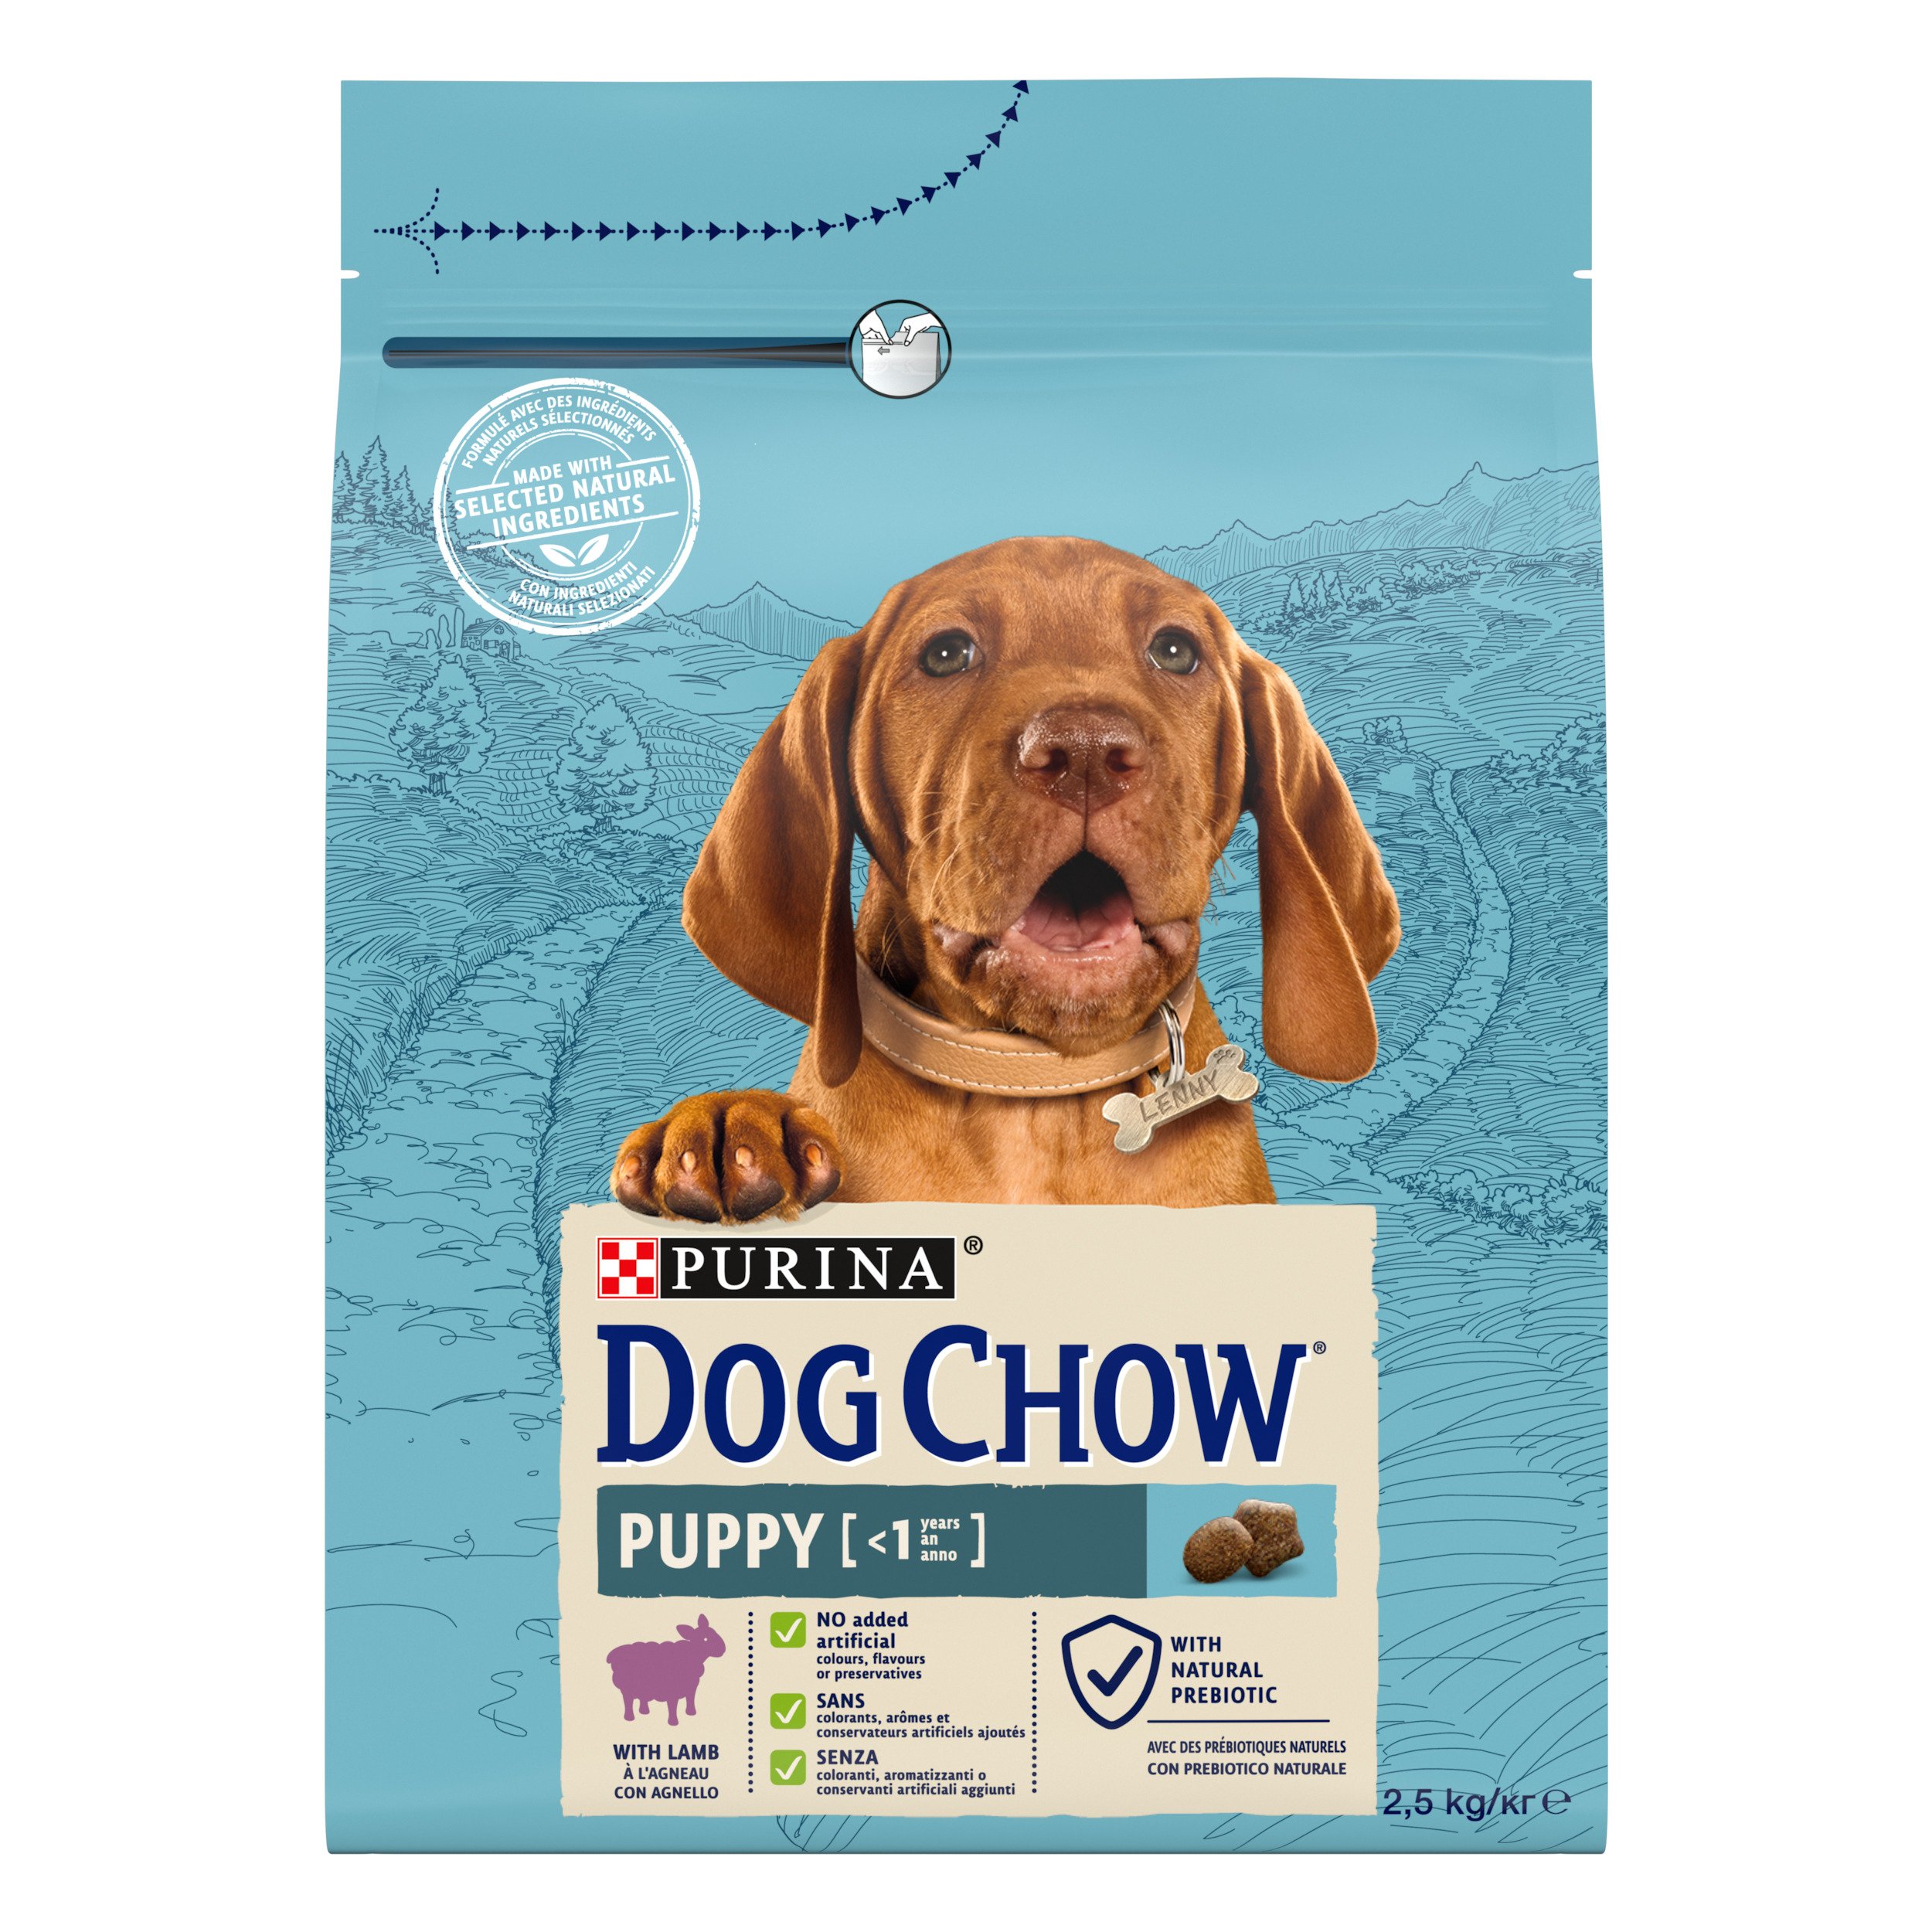 Сухой корм для щенков Dog Chow Puppy <1, с ягненком, 2,5 кг - фото 1